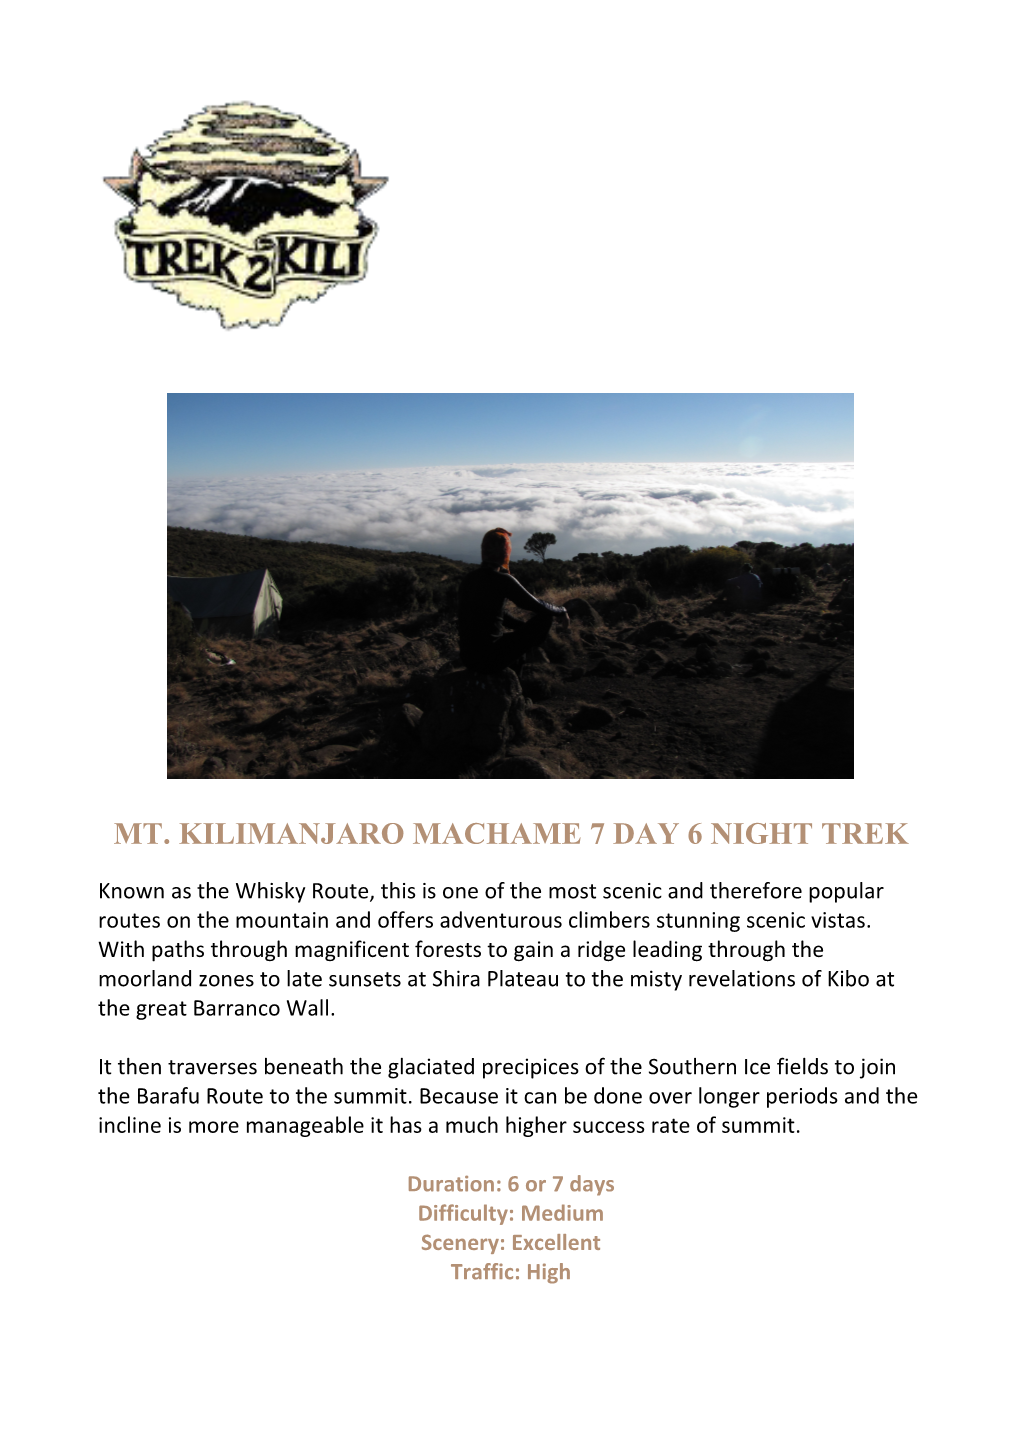 Mt. Kilimanjaro Machame 7 Day 6 Night Trek